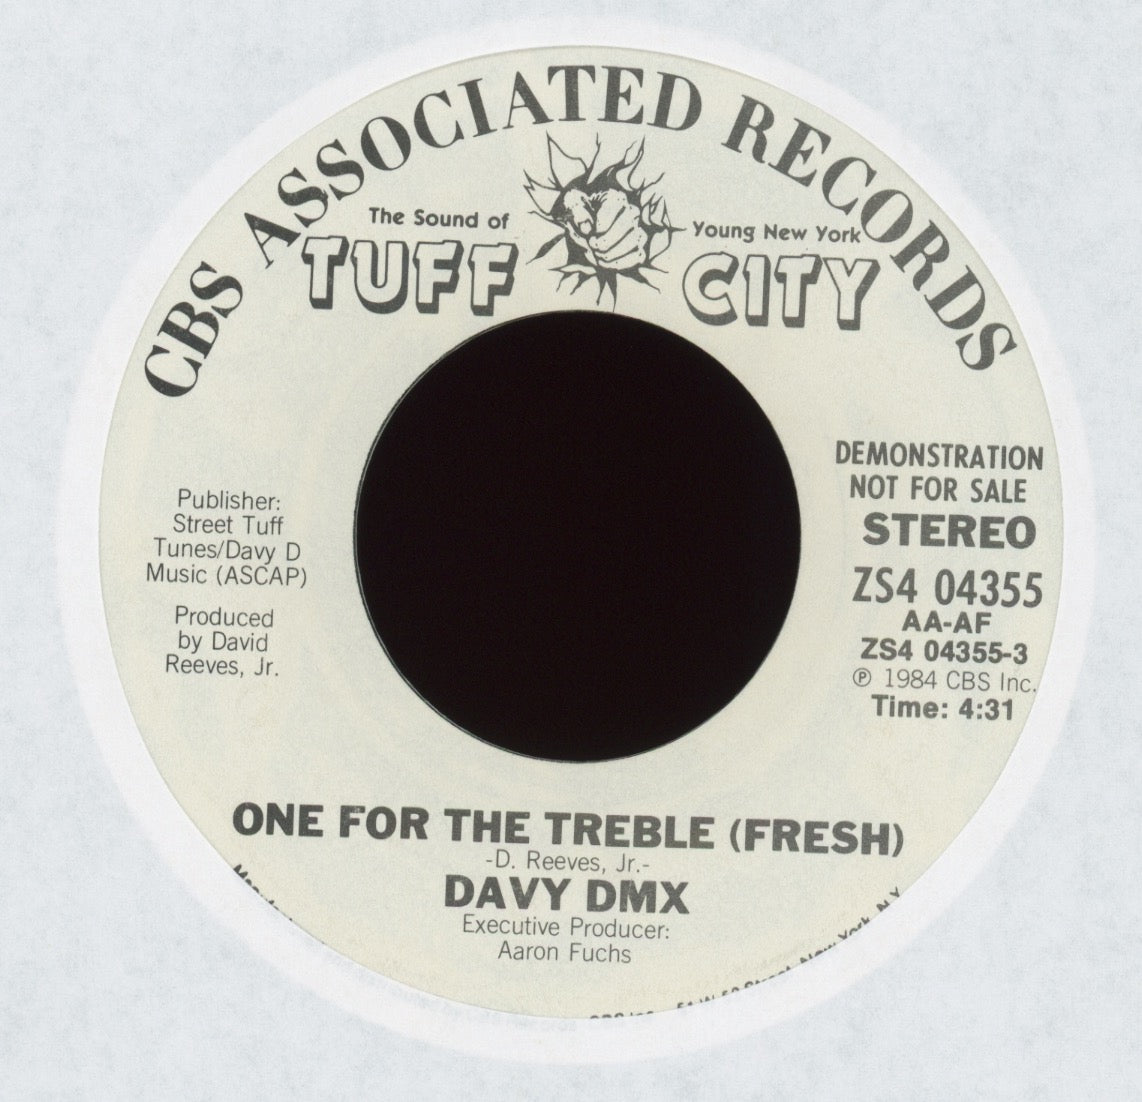 Davy DMX - One For The Treble (Fresh) on Tuff City